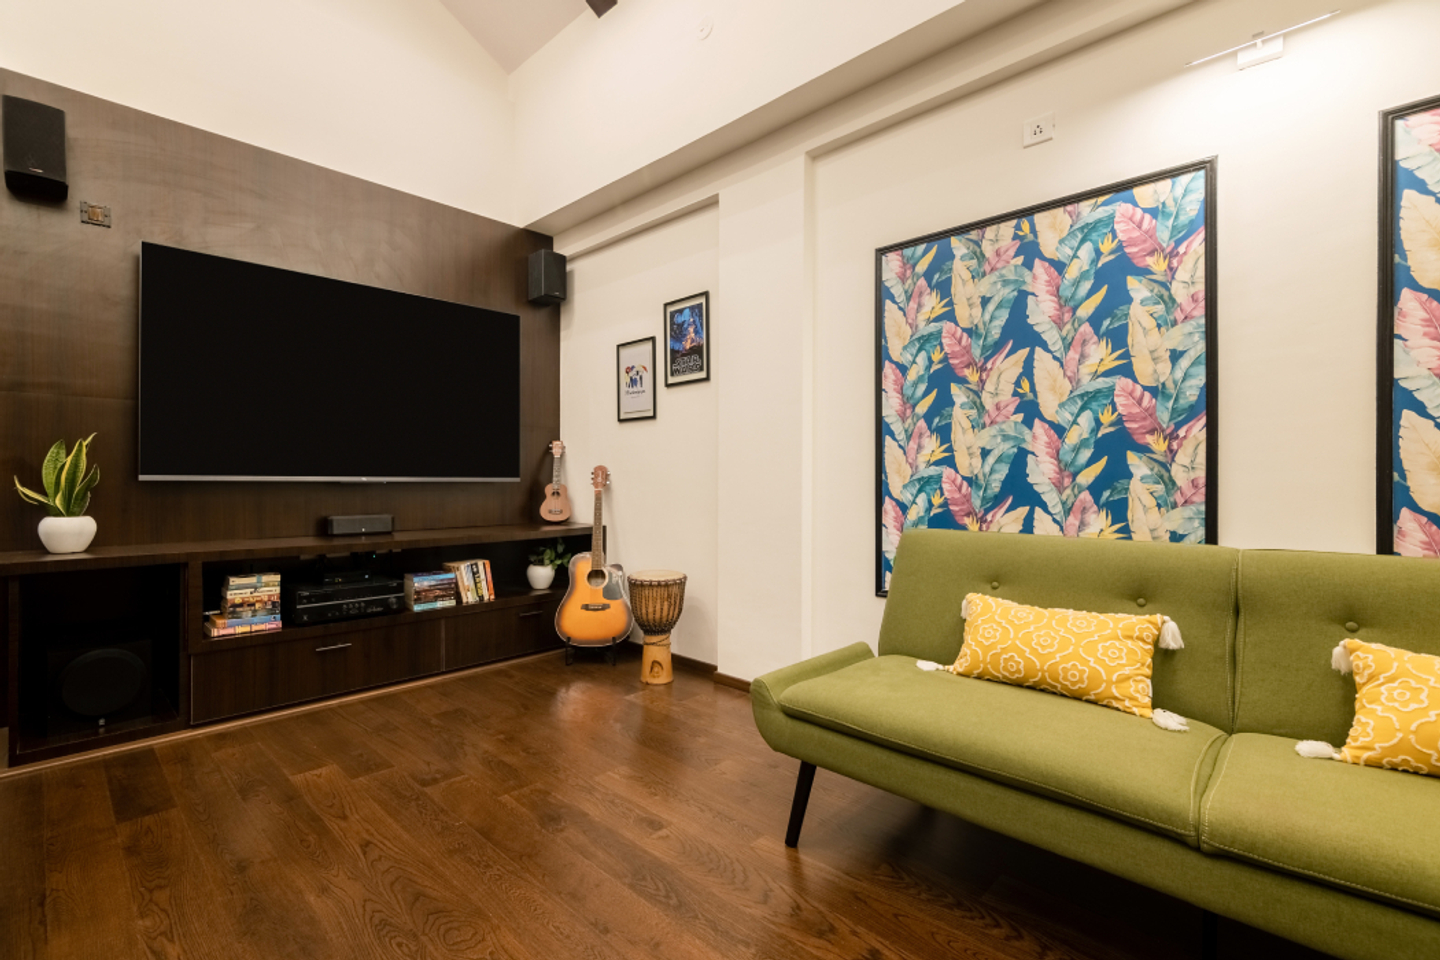 Living Room Design With Wooden Flooring - Livspace